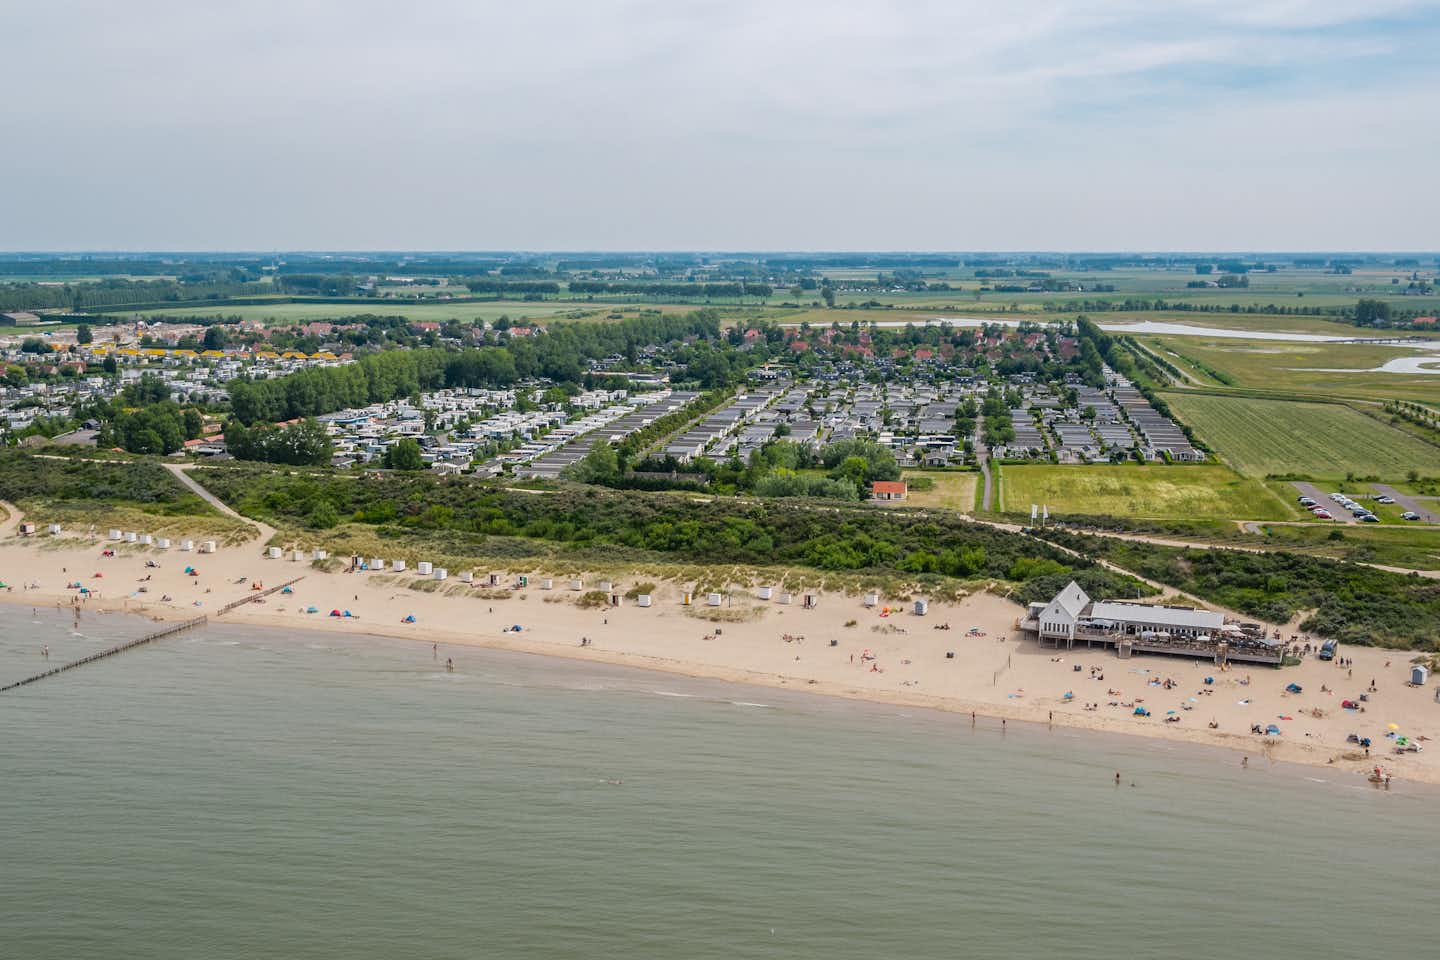 EuroParcs Schoneveld - Blick auf den Campingplatz am Strand